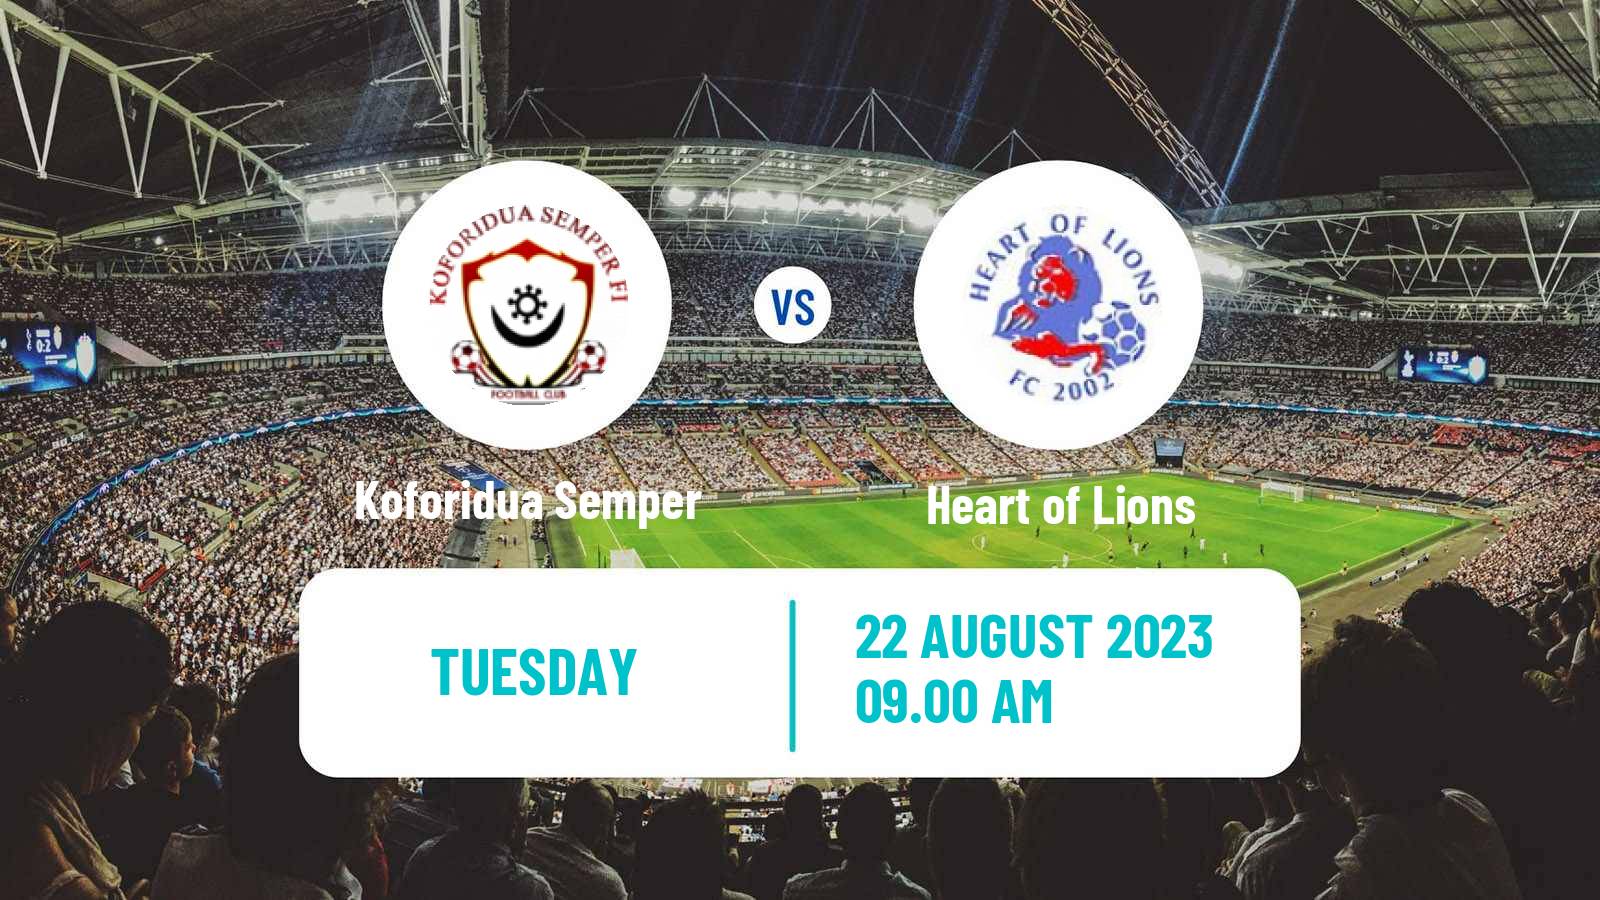 Soccer Club Friendly Koforidua Semper - Heart of Lions